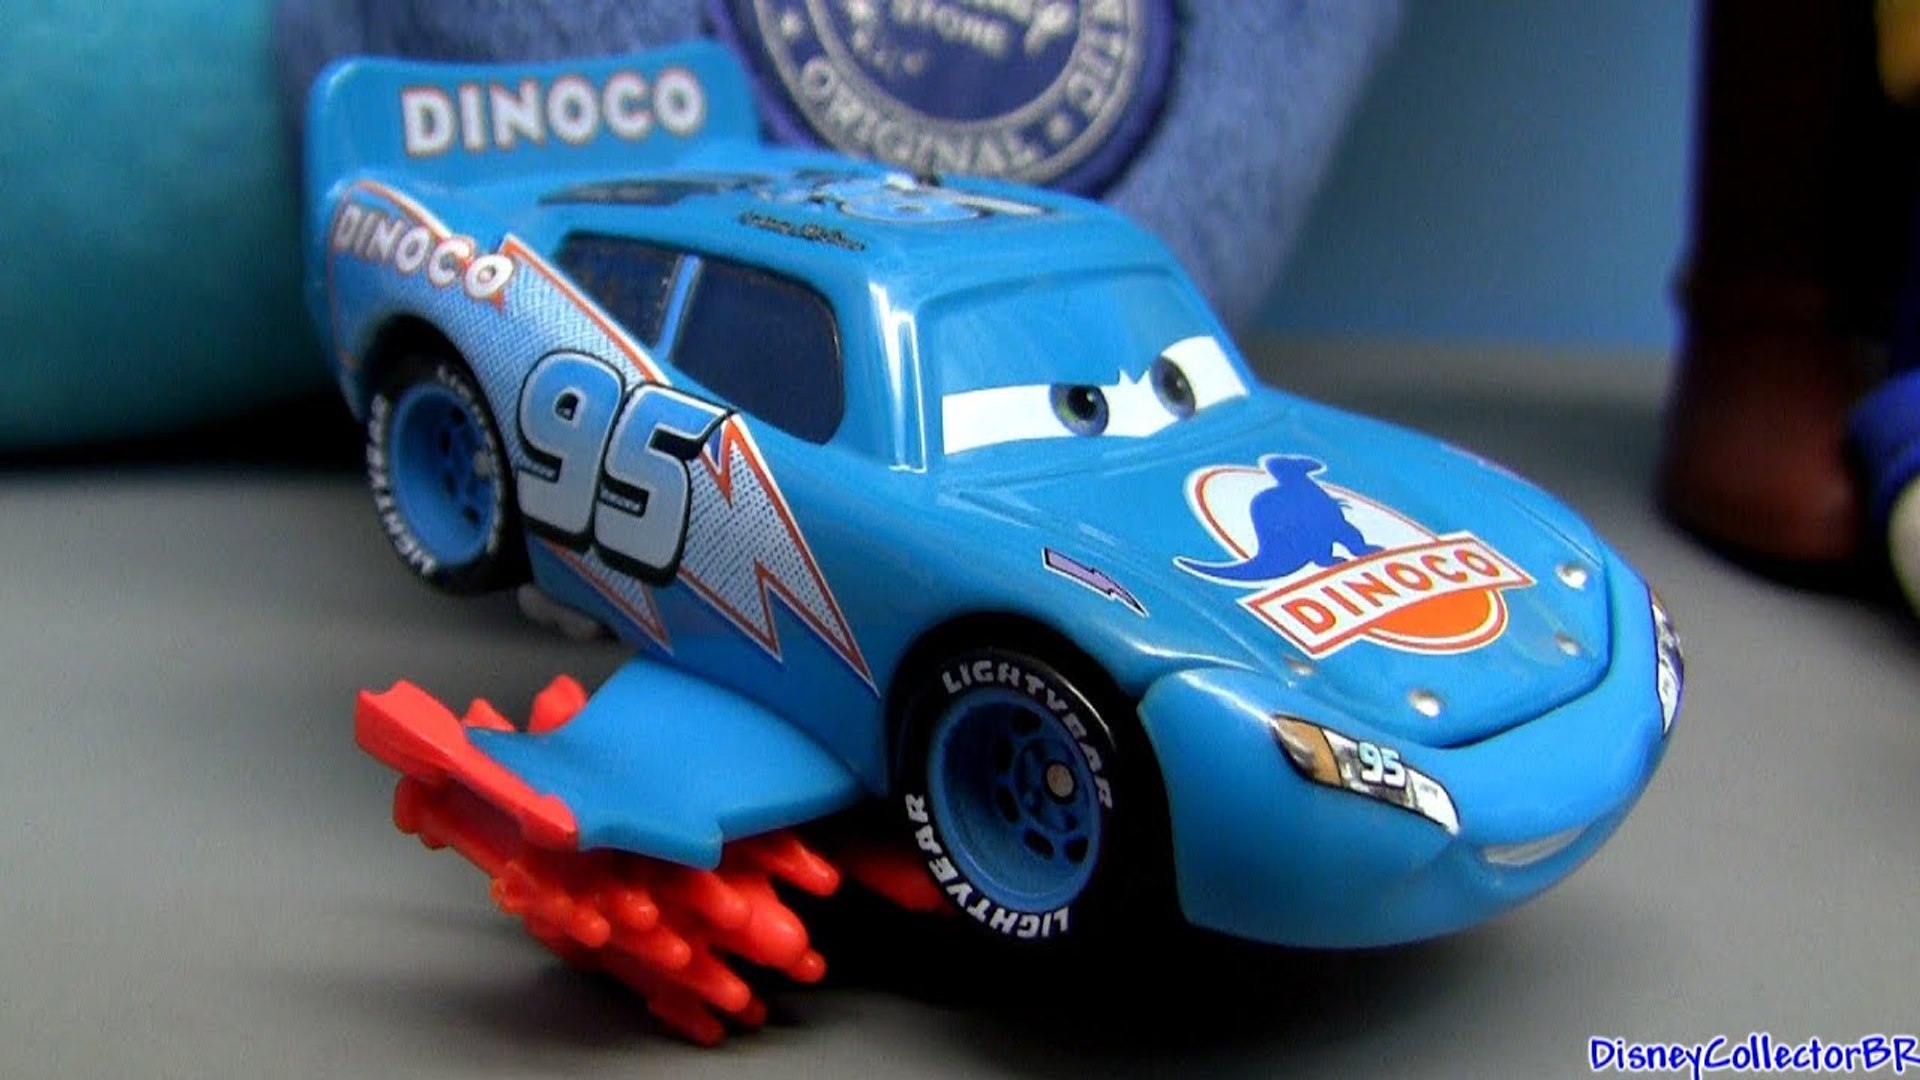 Storm Lightning Mcqueen Blue Dinoco From Disney Cars Pixar Figure Mattel Similar To Comic Con